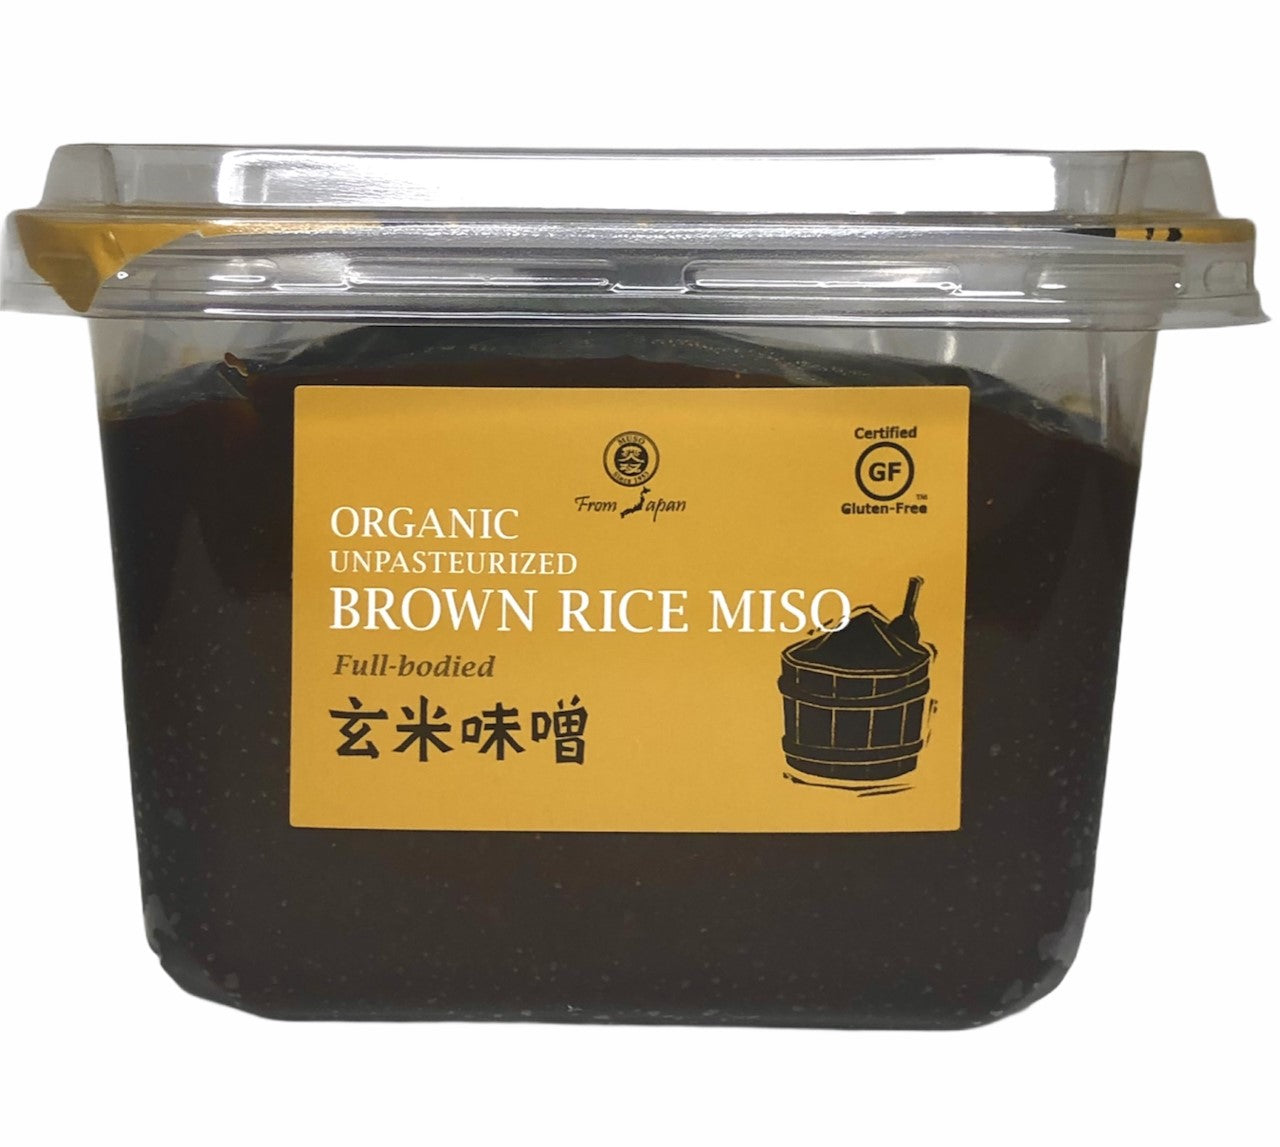 Muso Organic Unpasteurized Brown Rice Miso 400g, Gluten Free